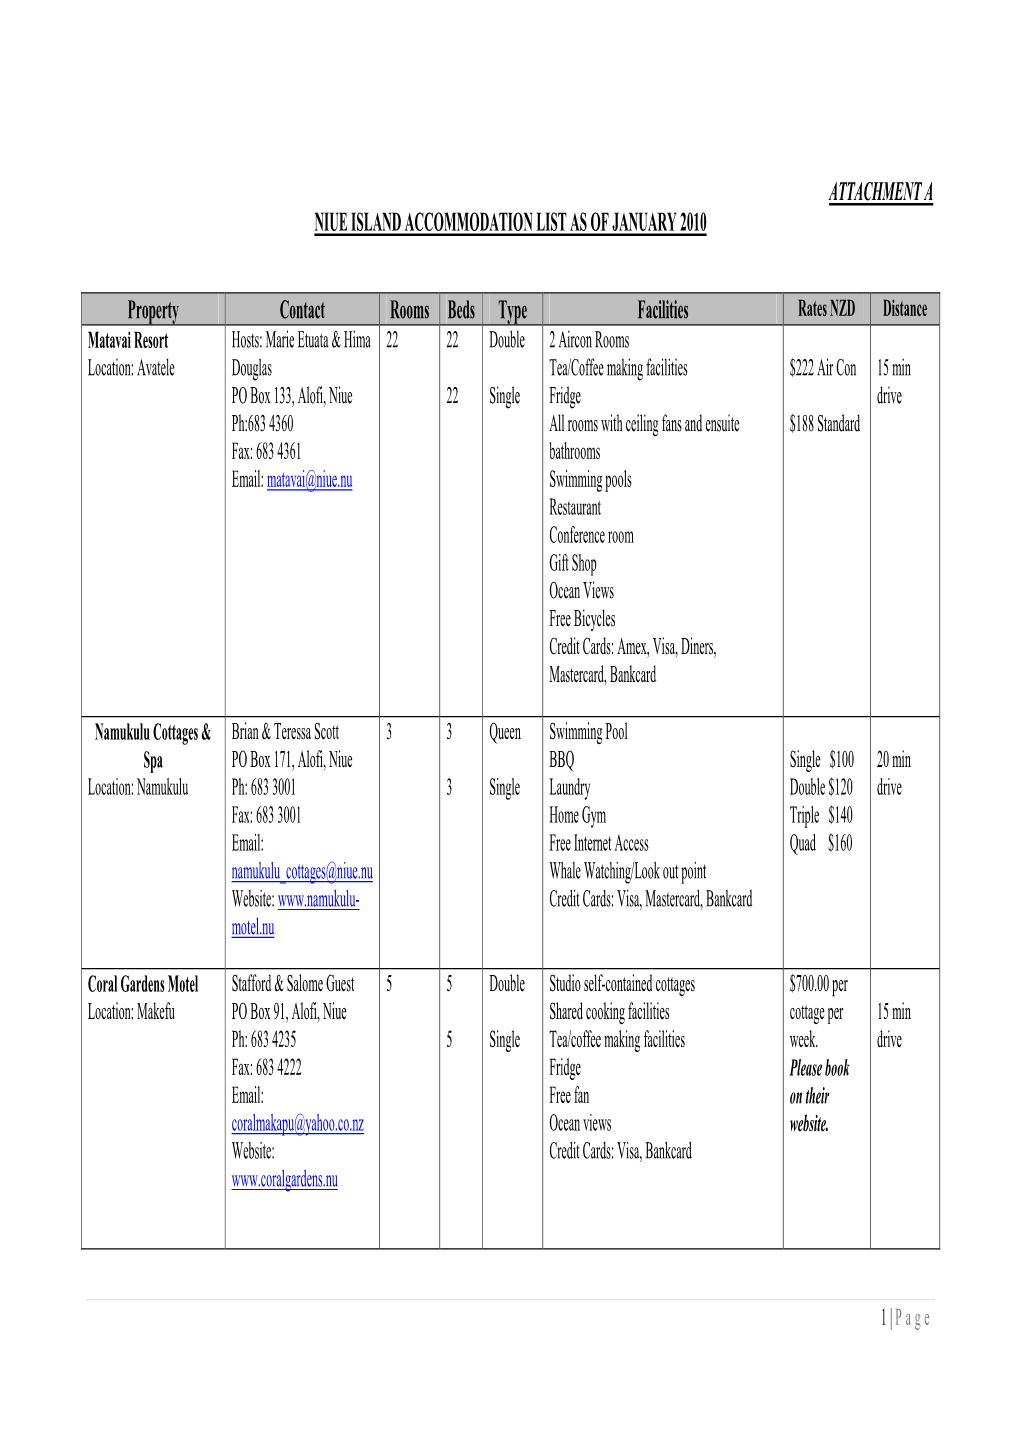 Accommodation List As at Jan 2010.Pdf